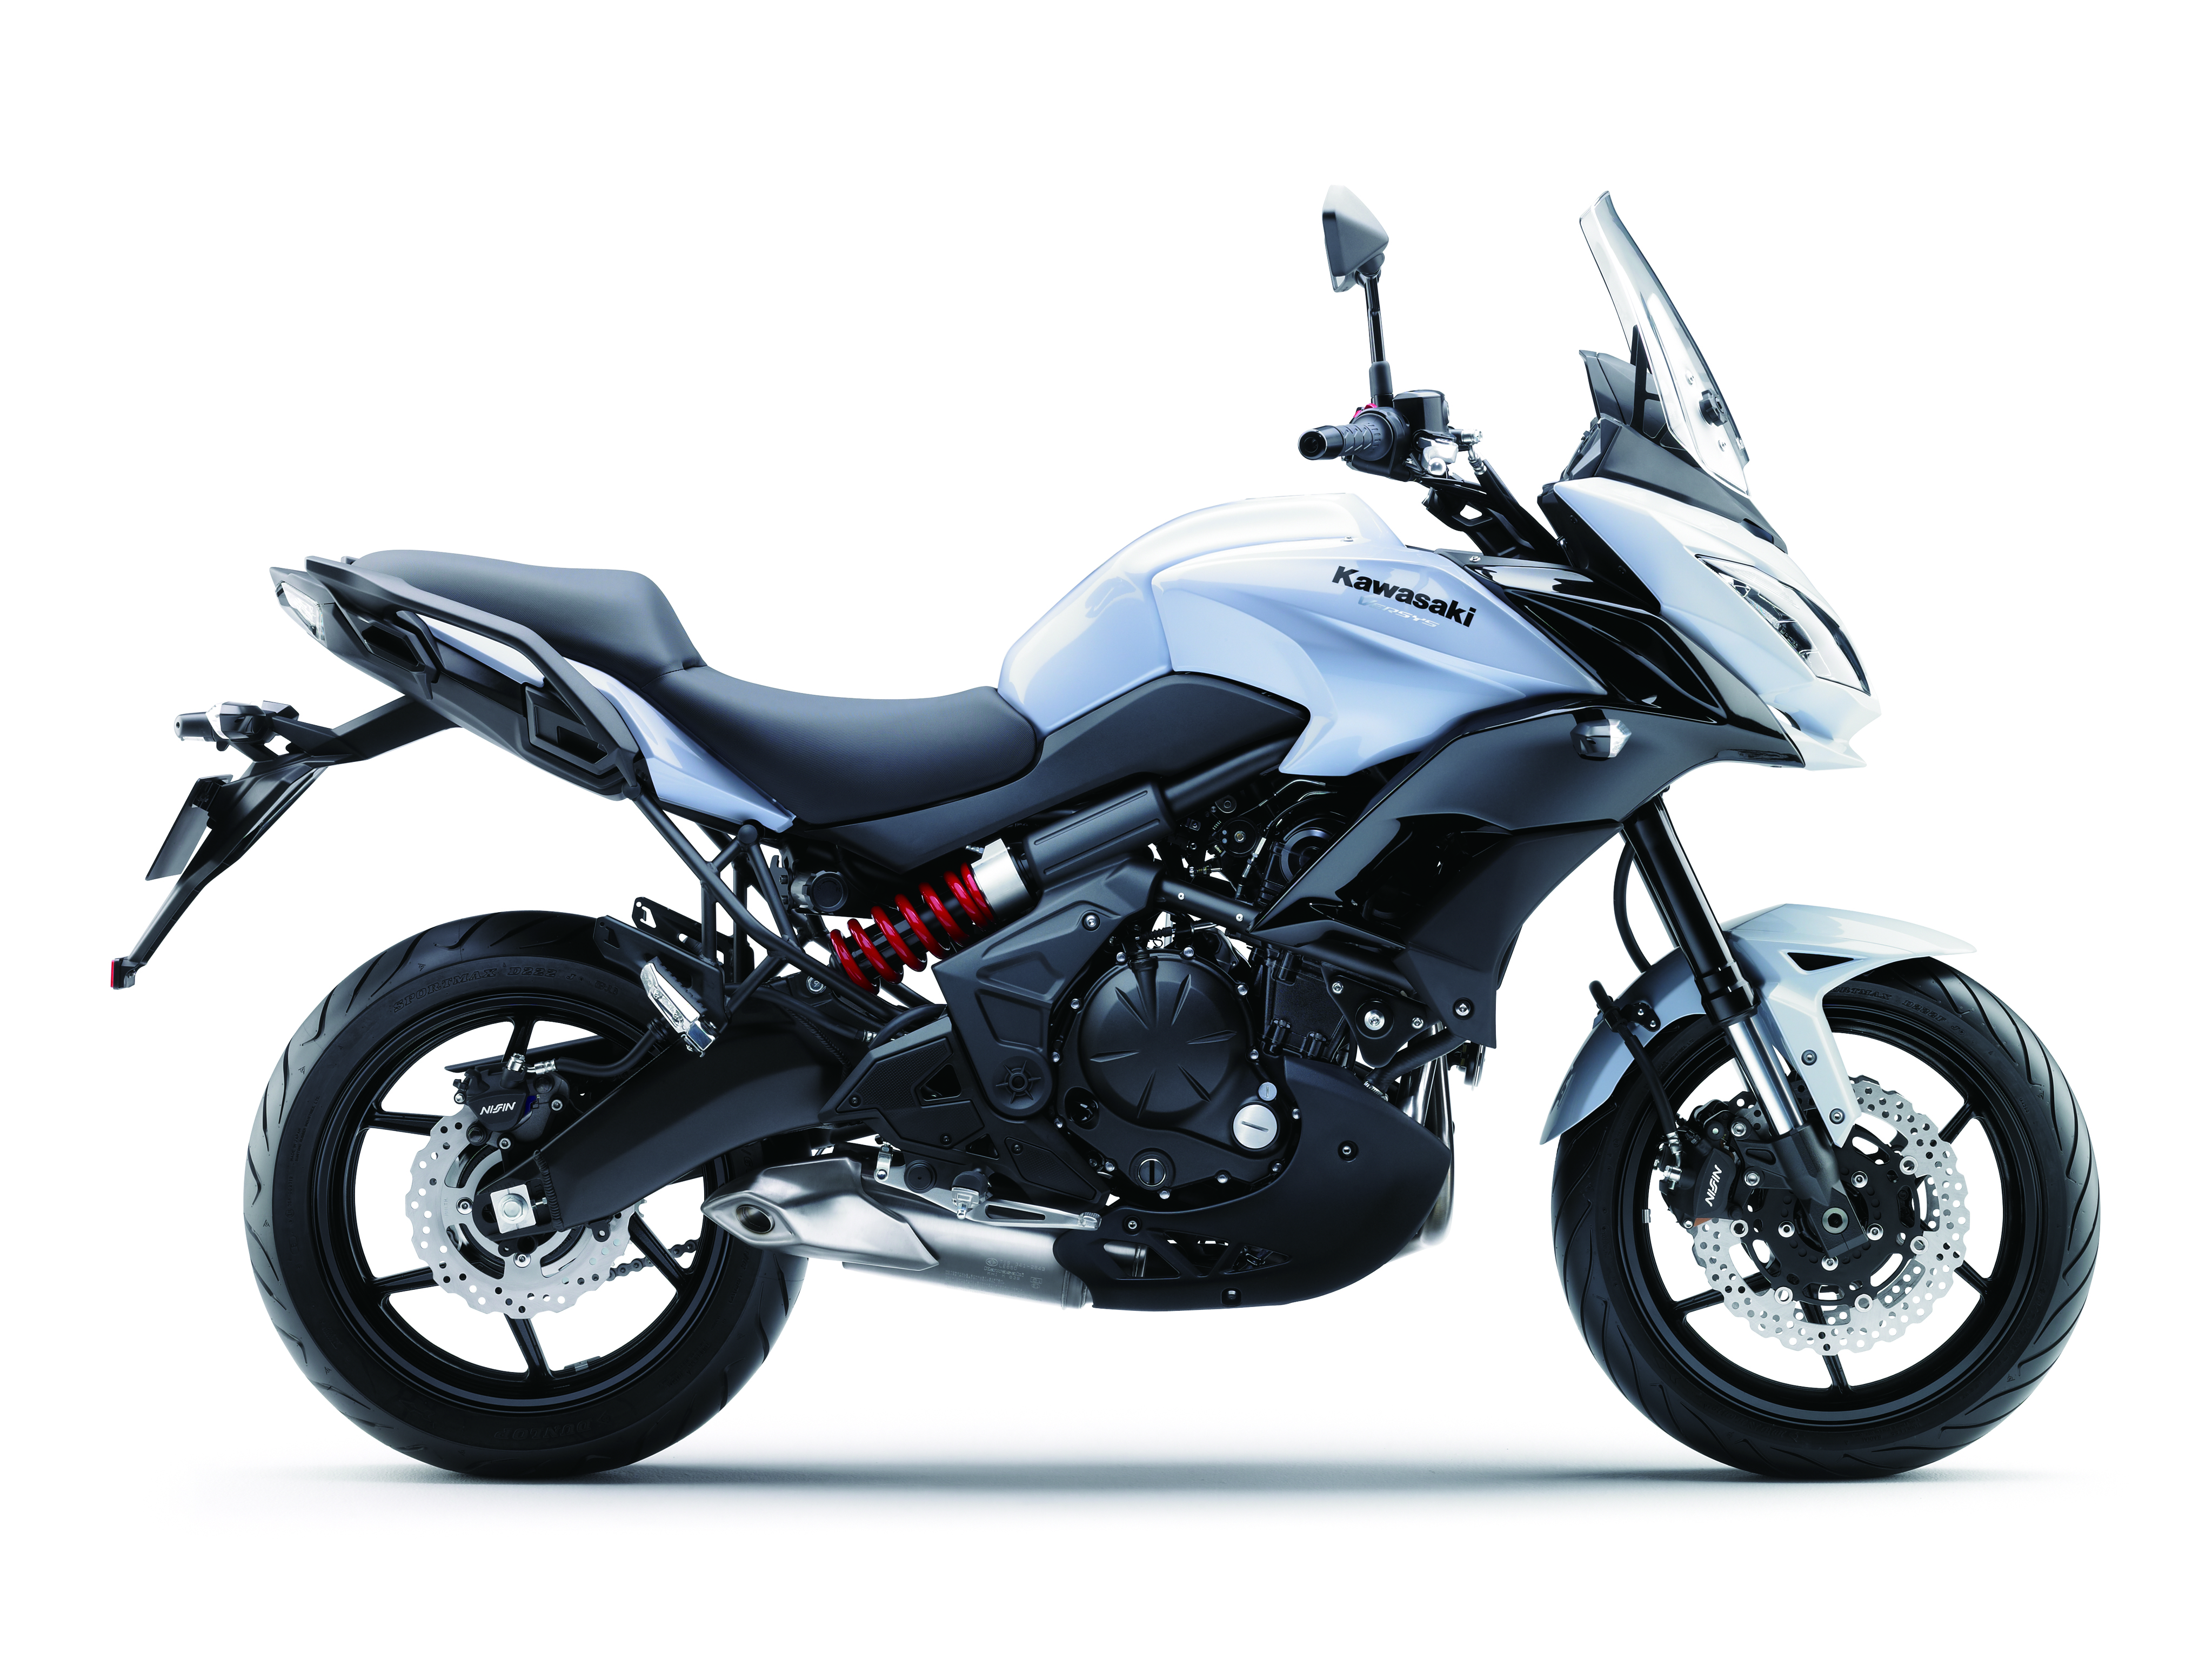 Intermot 2014: New Kawasaki Versys 650 unveiled